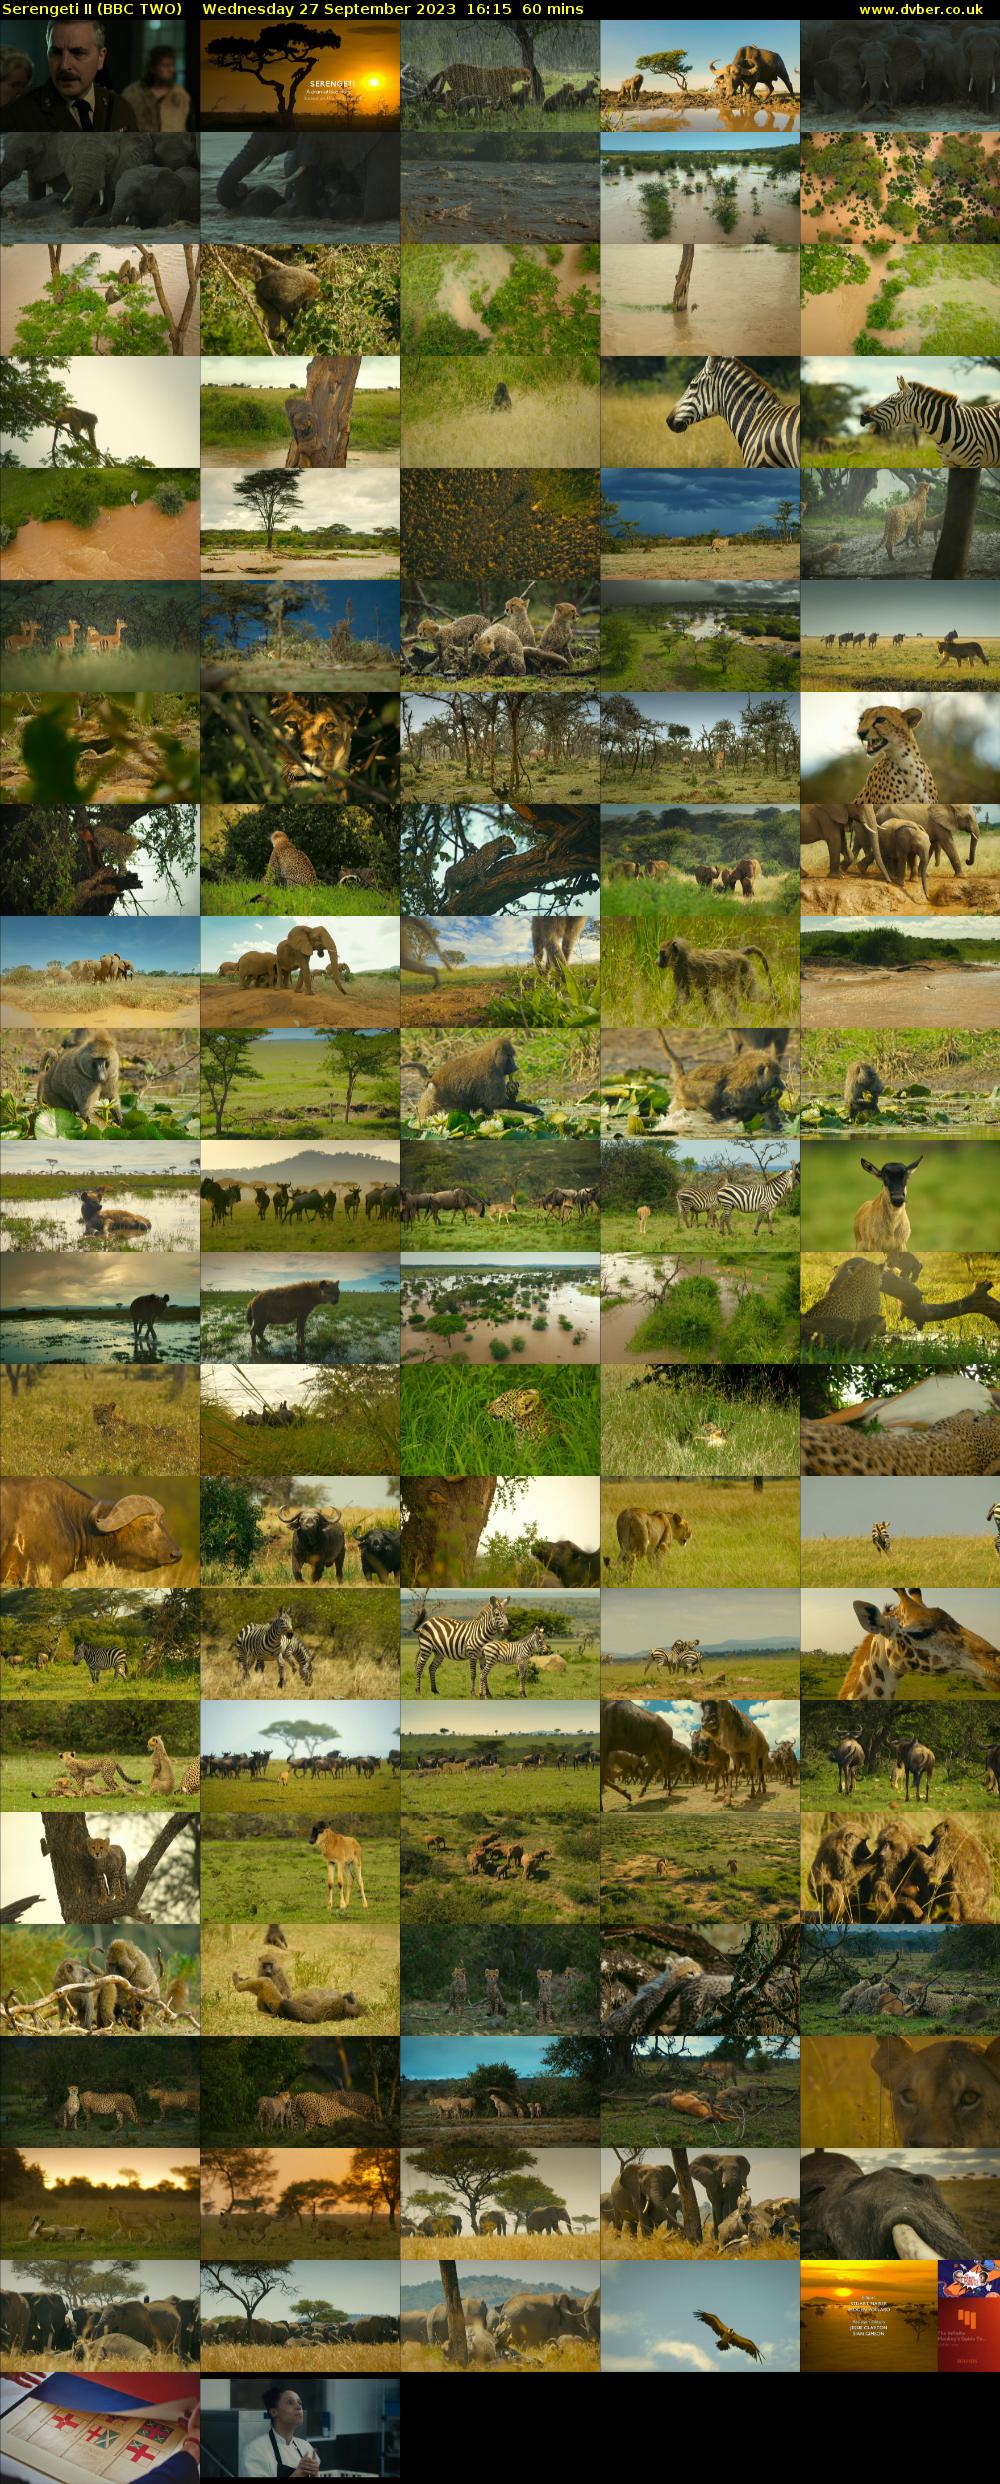 Serengeti II (BBC TWO) Wednesday 27 September 2023 16:15 - 17:15